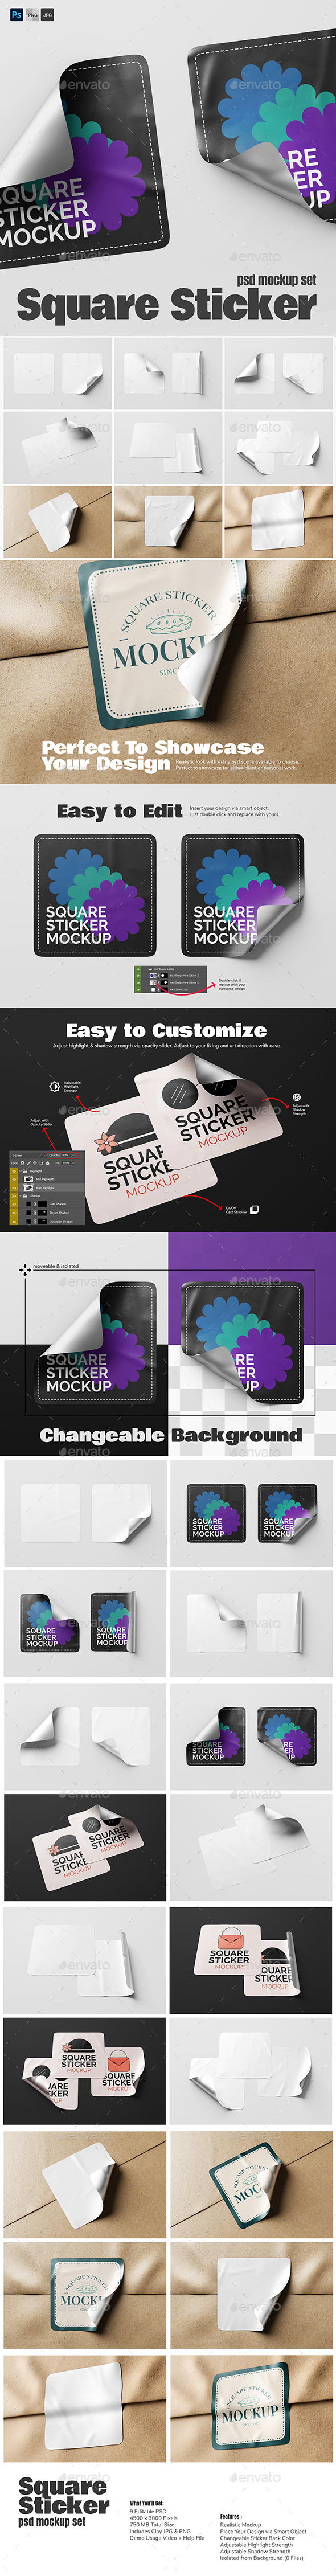 [DOWNLOAD]Square Sticker Label Mockup - 9 PSD